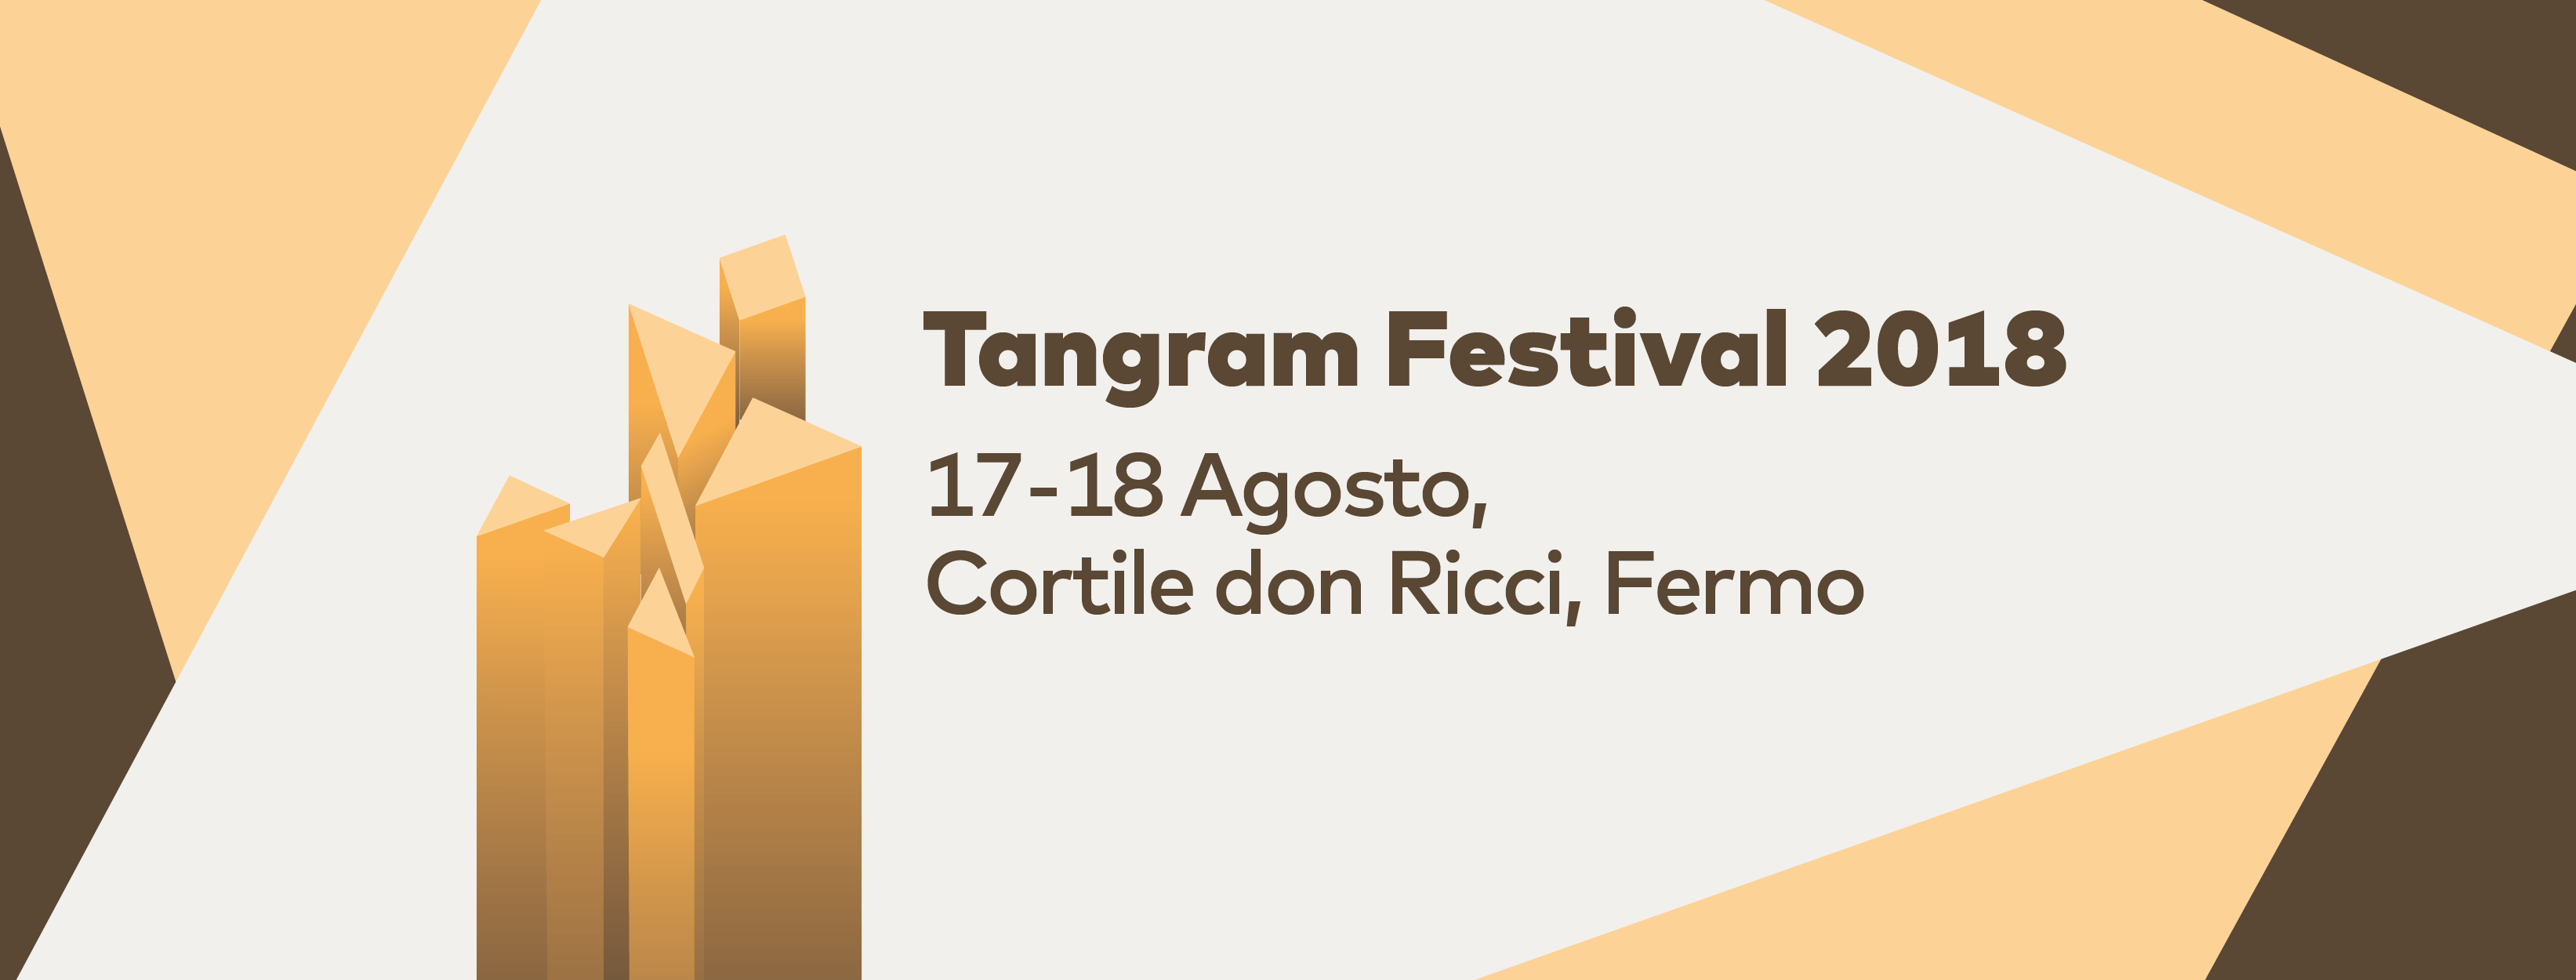 Tangram Festival 2018 copertina